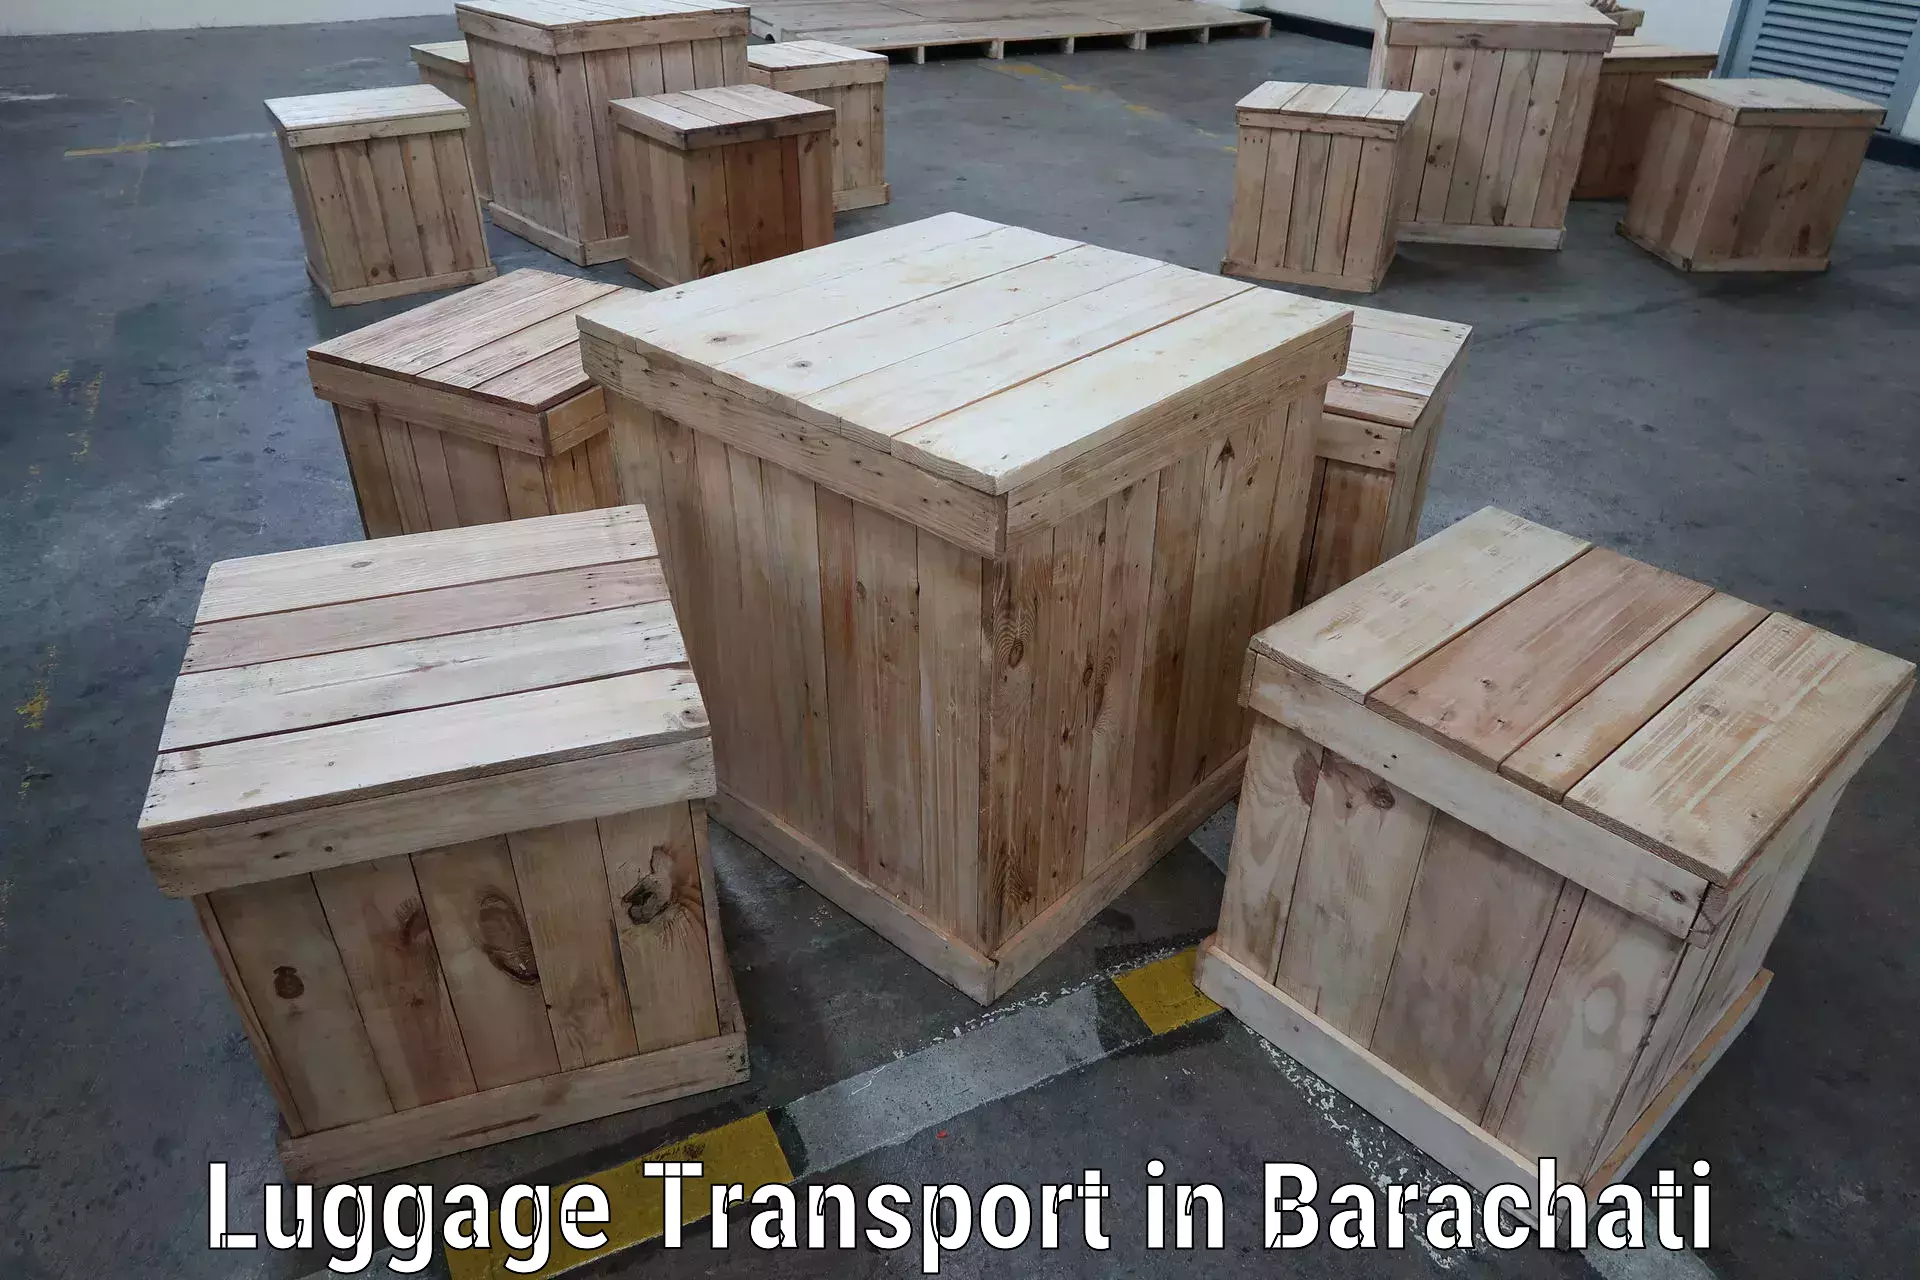 Luggage transit service in Barachati